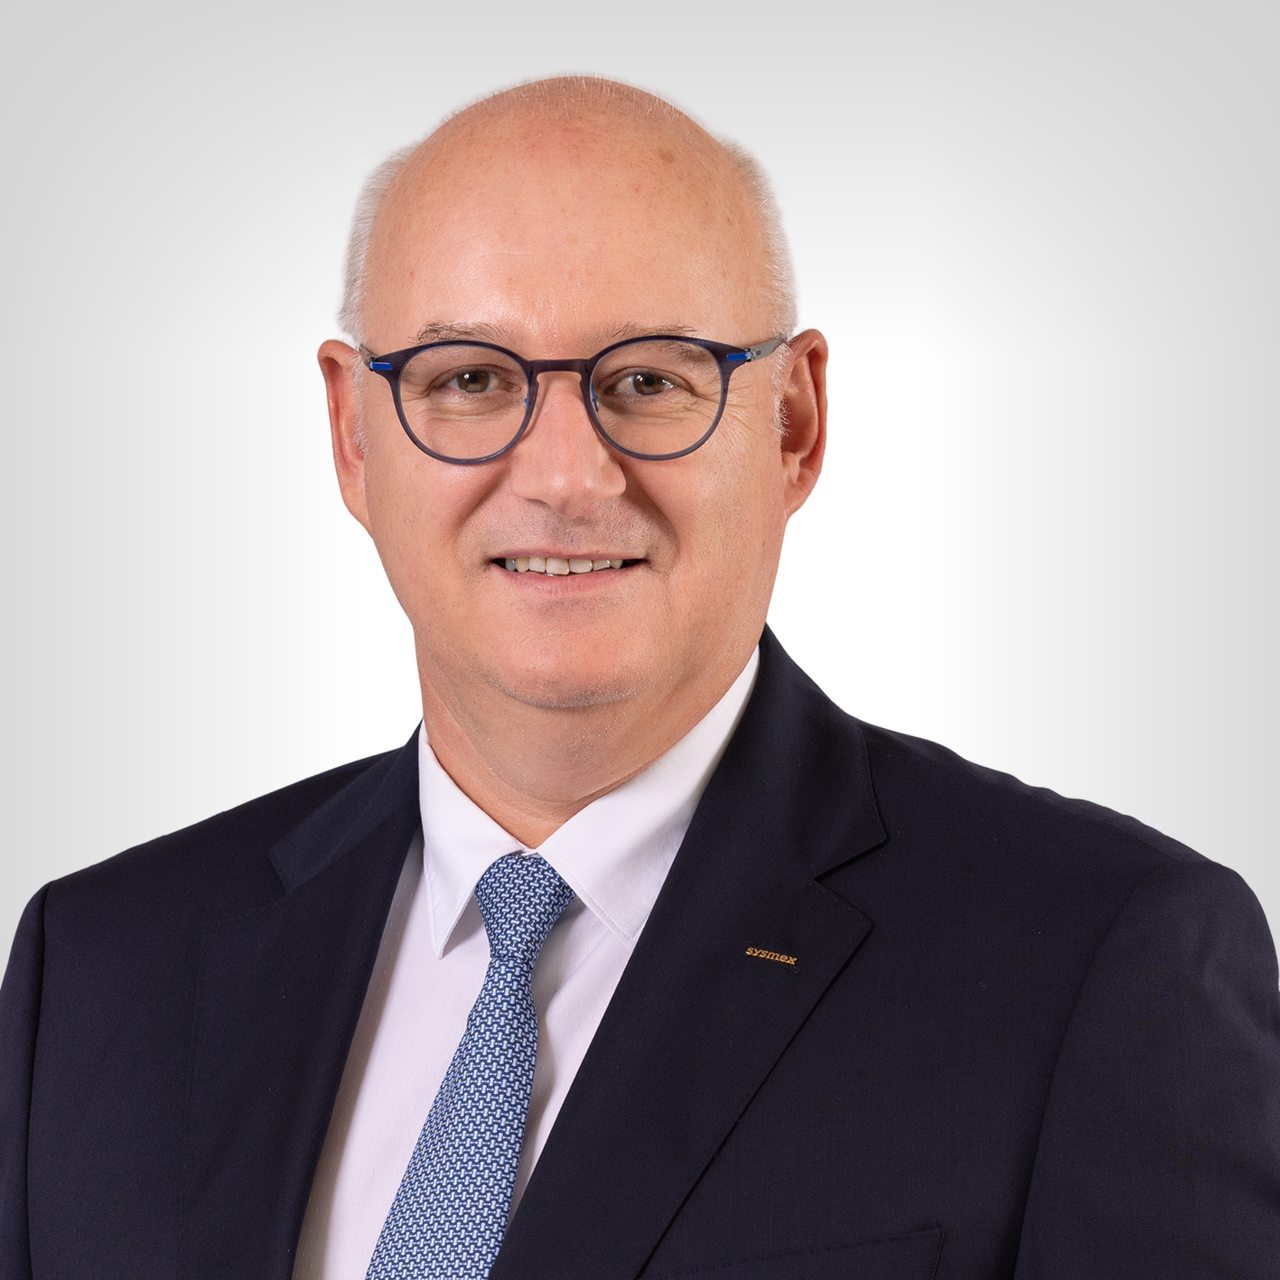 Sysmex Europe CEO Alain Baverel